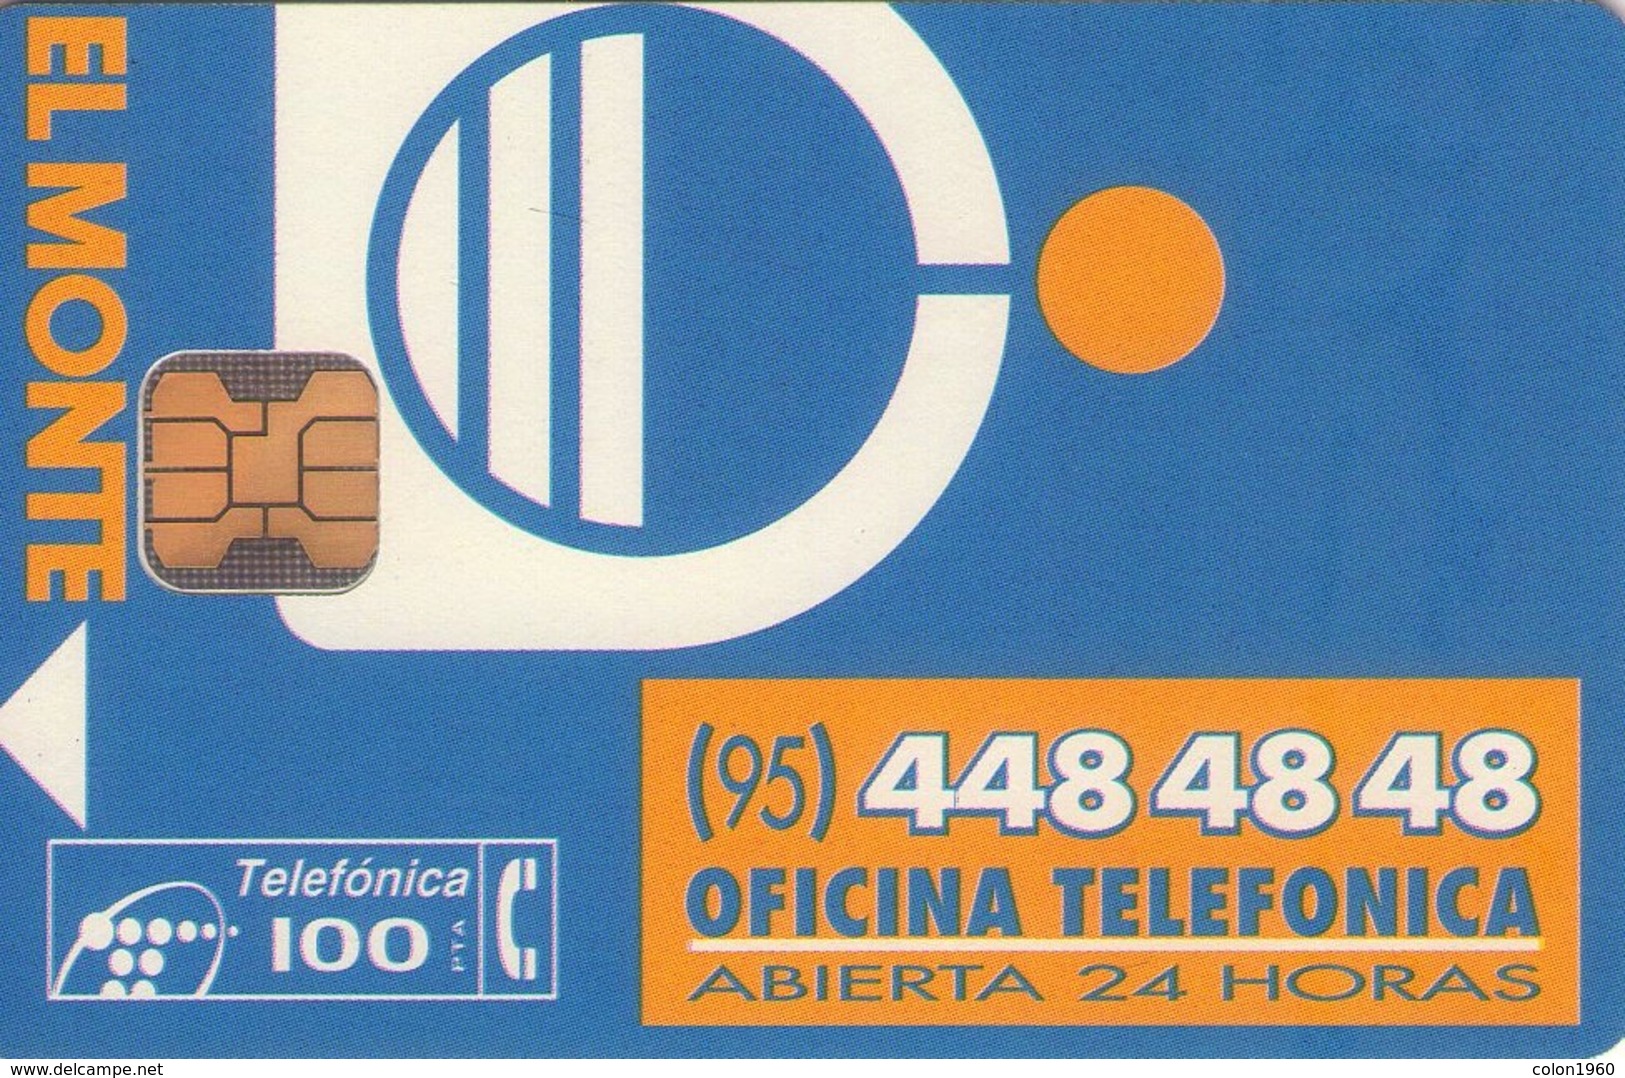 ESPAÑA. P-106. EL MONTE. 1994-12. 33100 Ex. MINT. (433). - Privatausgaben